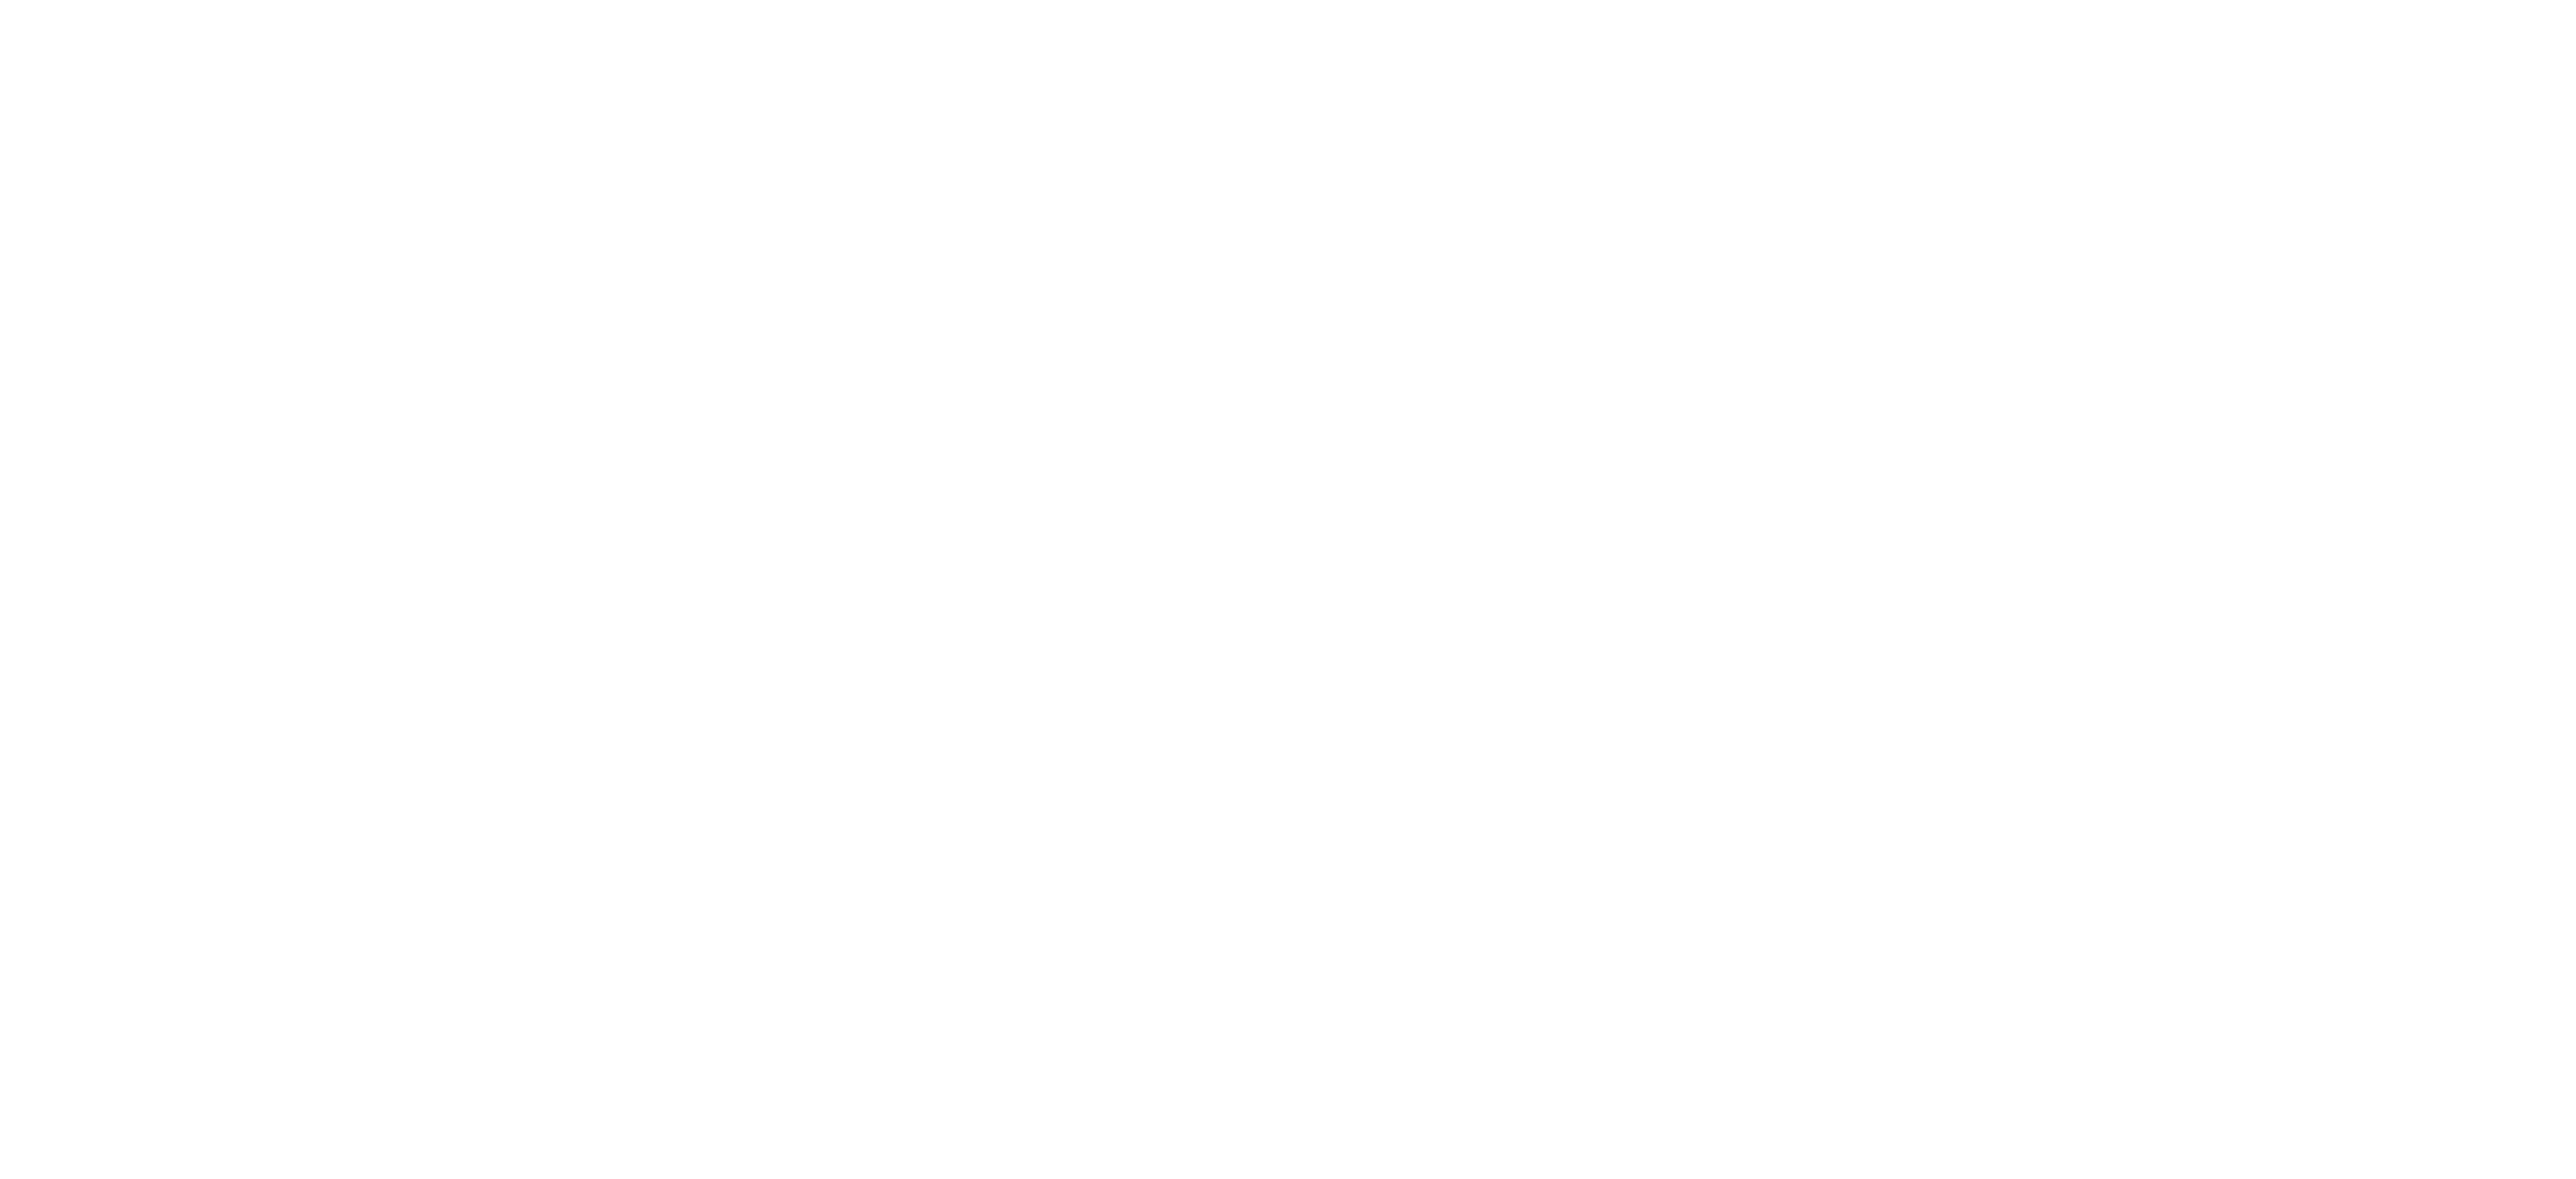 Habit Health Services